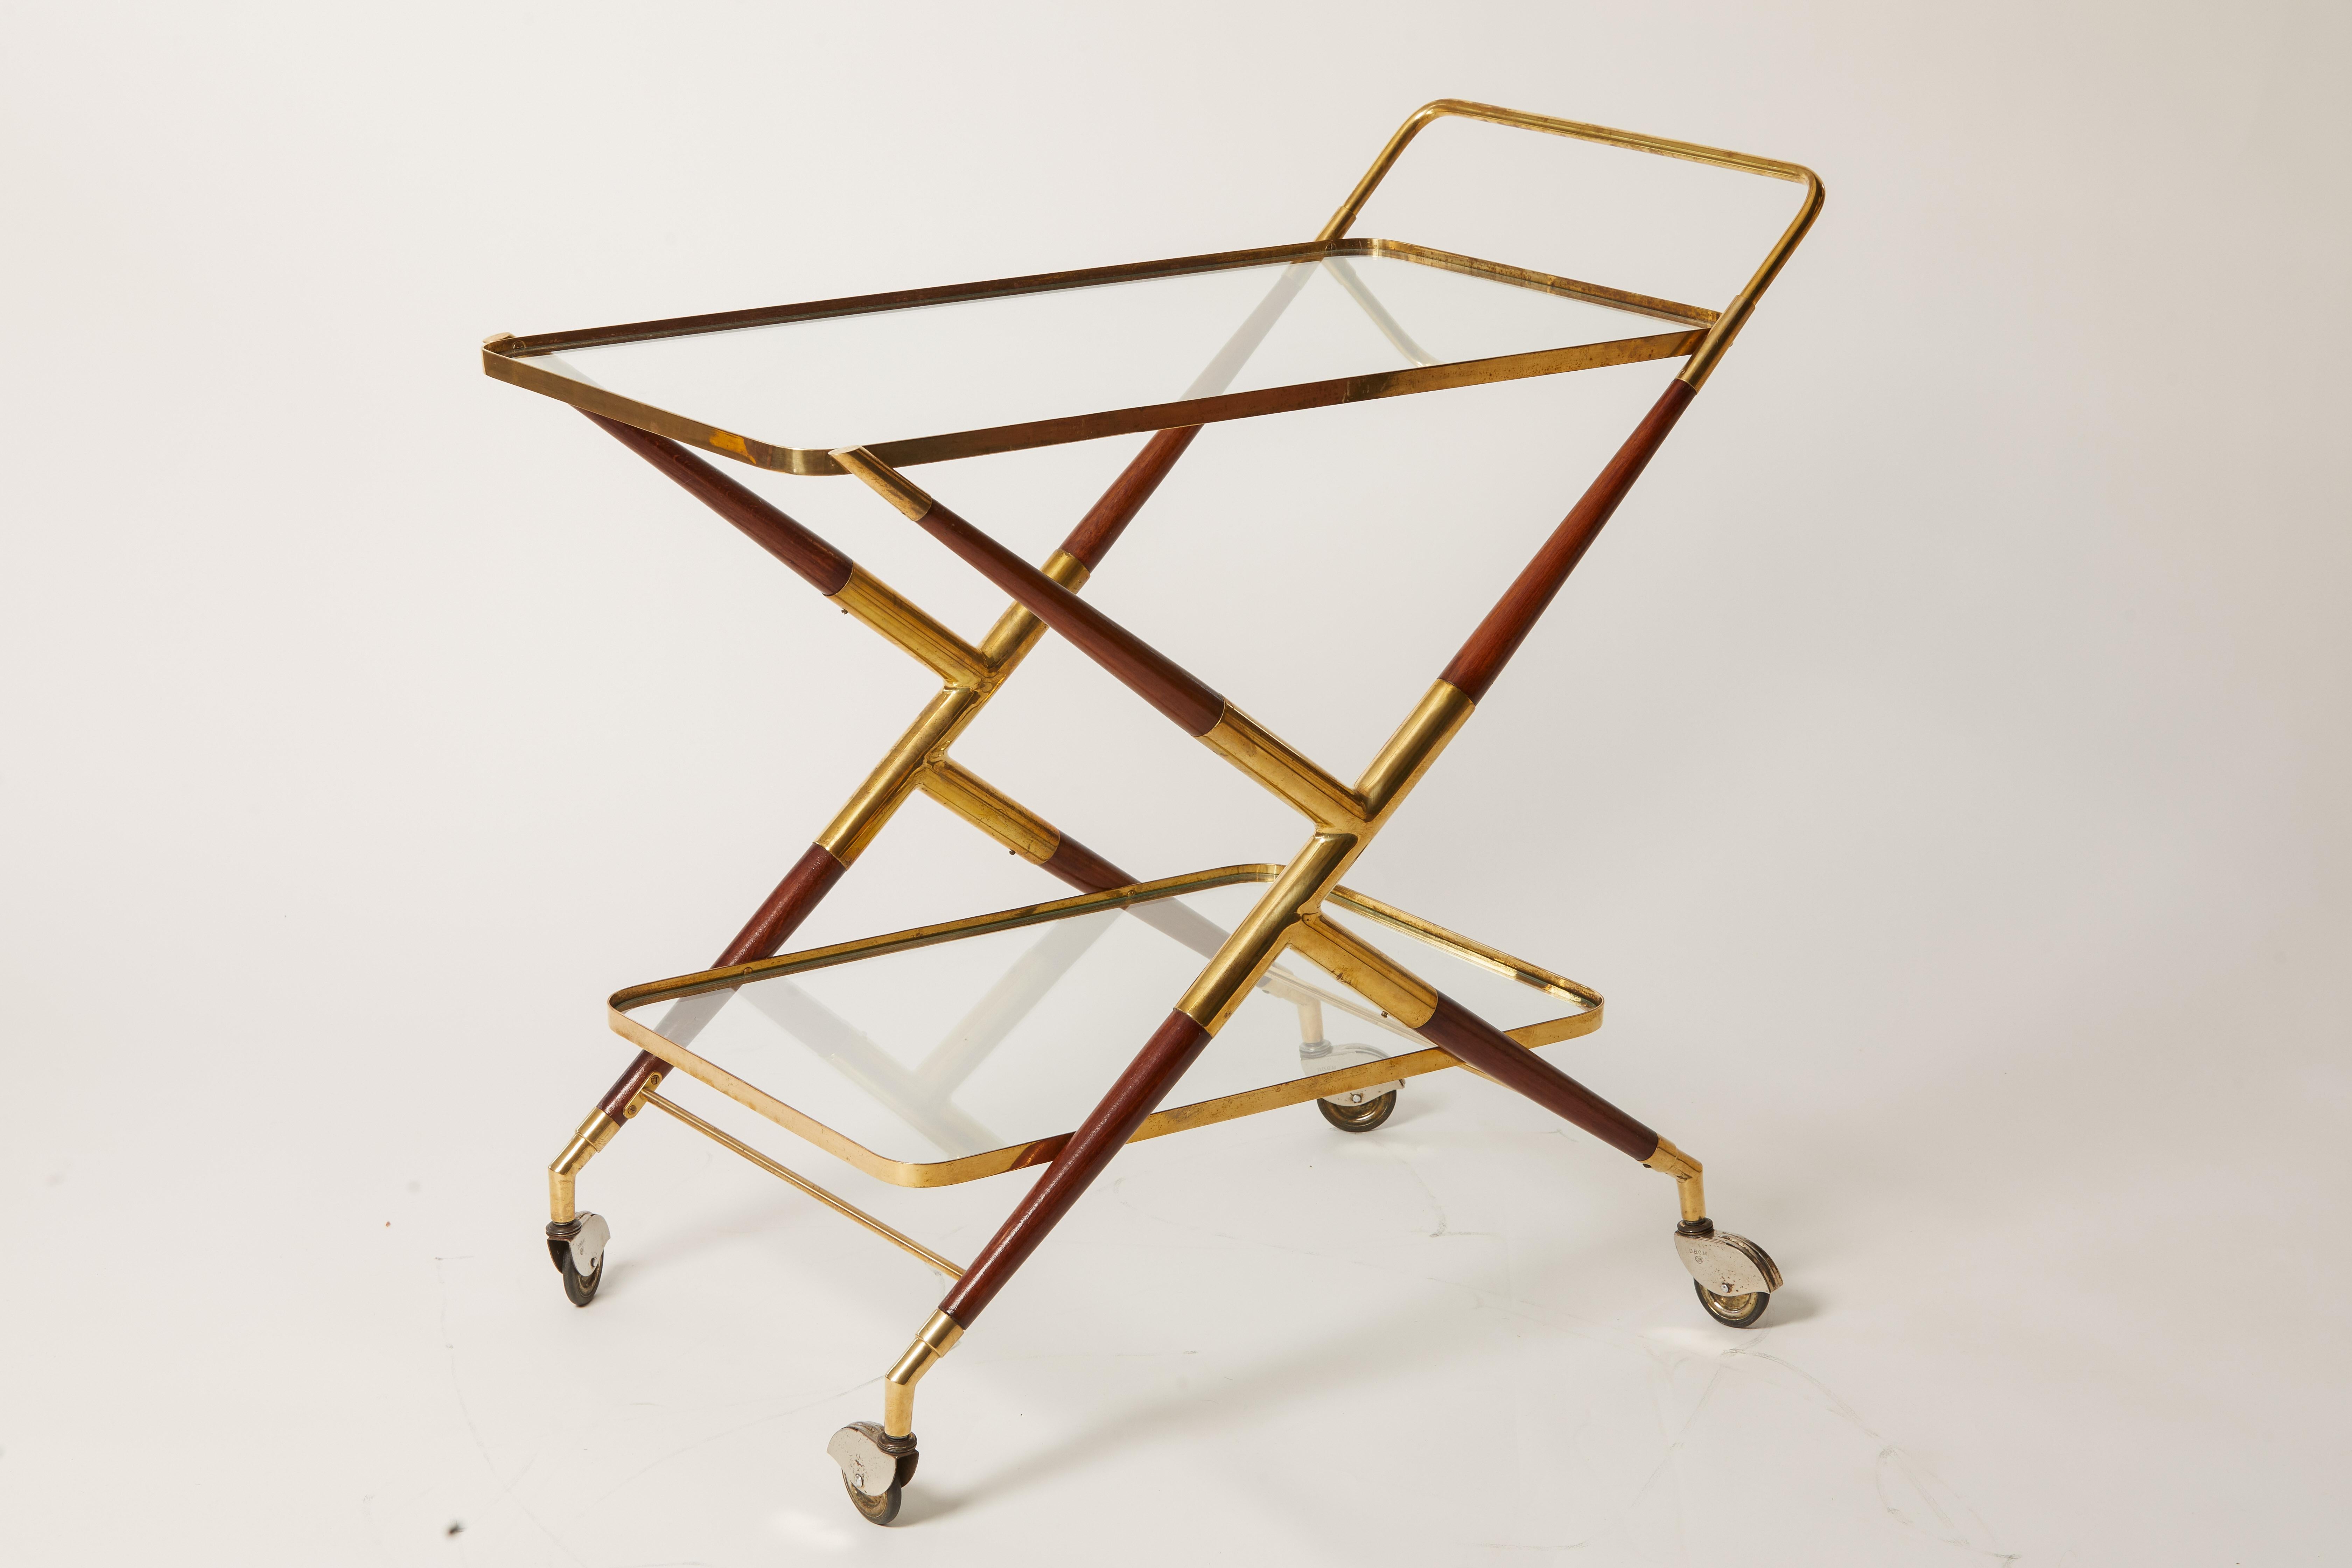 1950s Italian Cesare Lacca brass, walnut  and glass drinks cart. Documented piece 
Width 29.5 is to the handle.
Bottom shelf W: 21